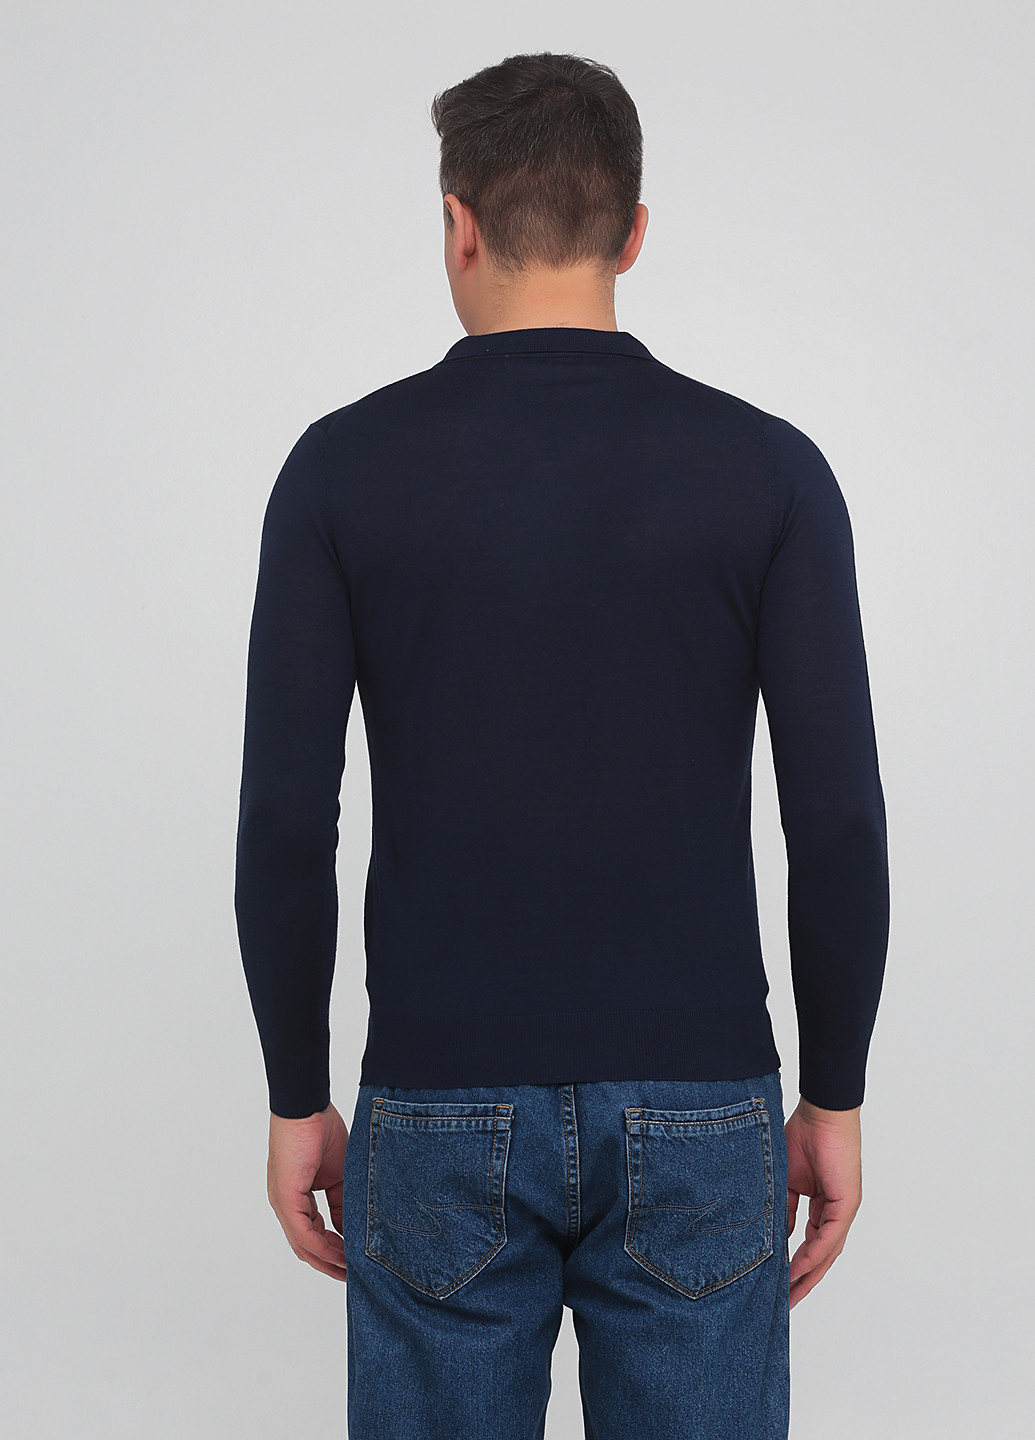 Темно-синий демисезонный пуловер пуловер Pierre Balmain